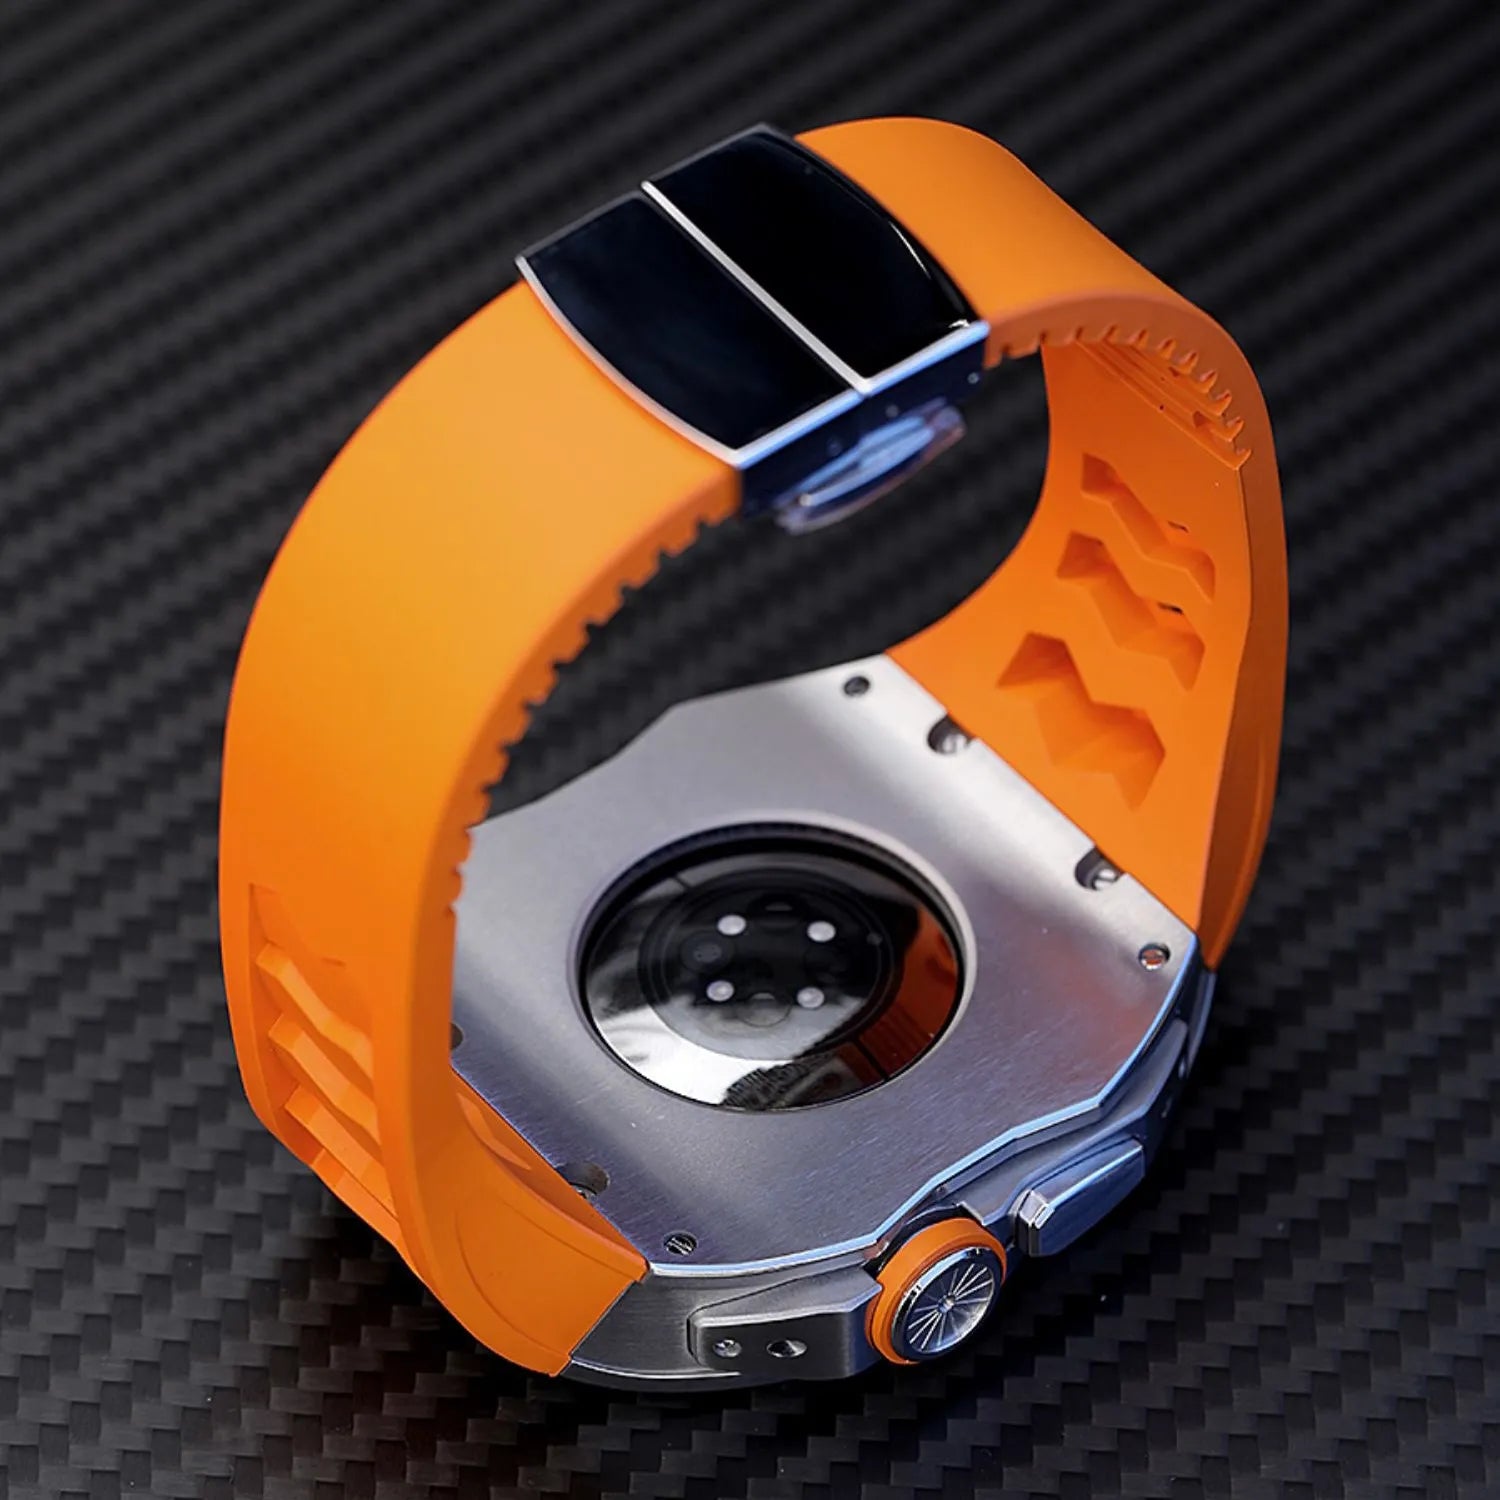  EKINS Upgrade Titanium Alloy Watch Case，For Apple